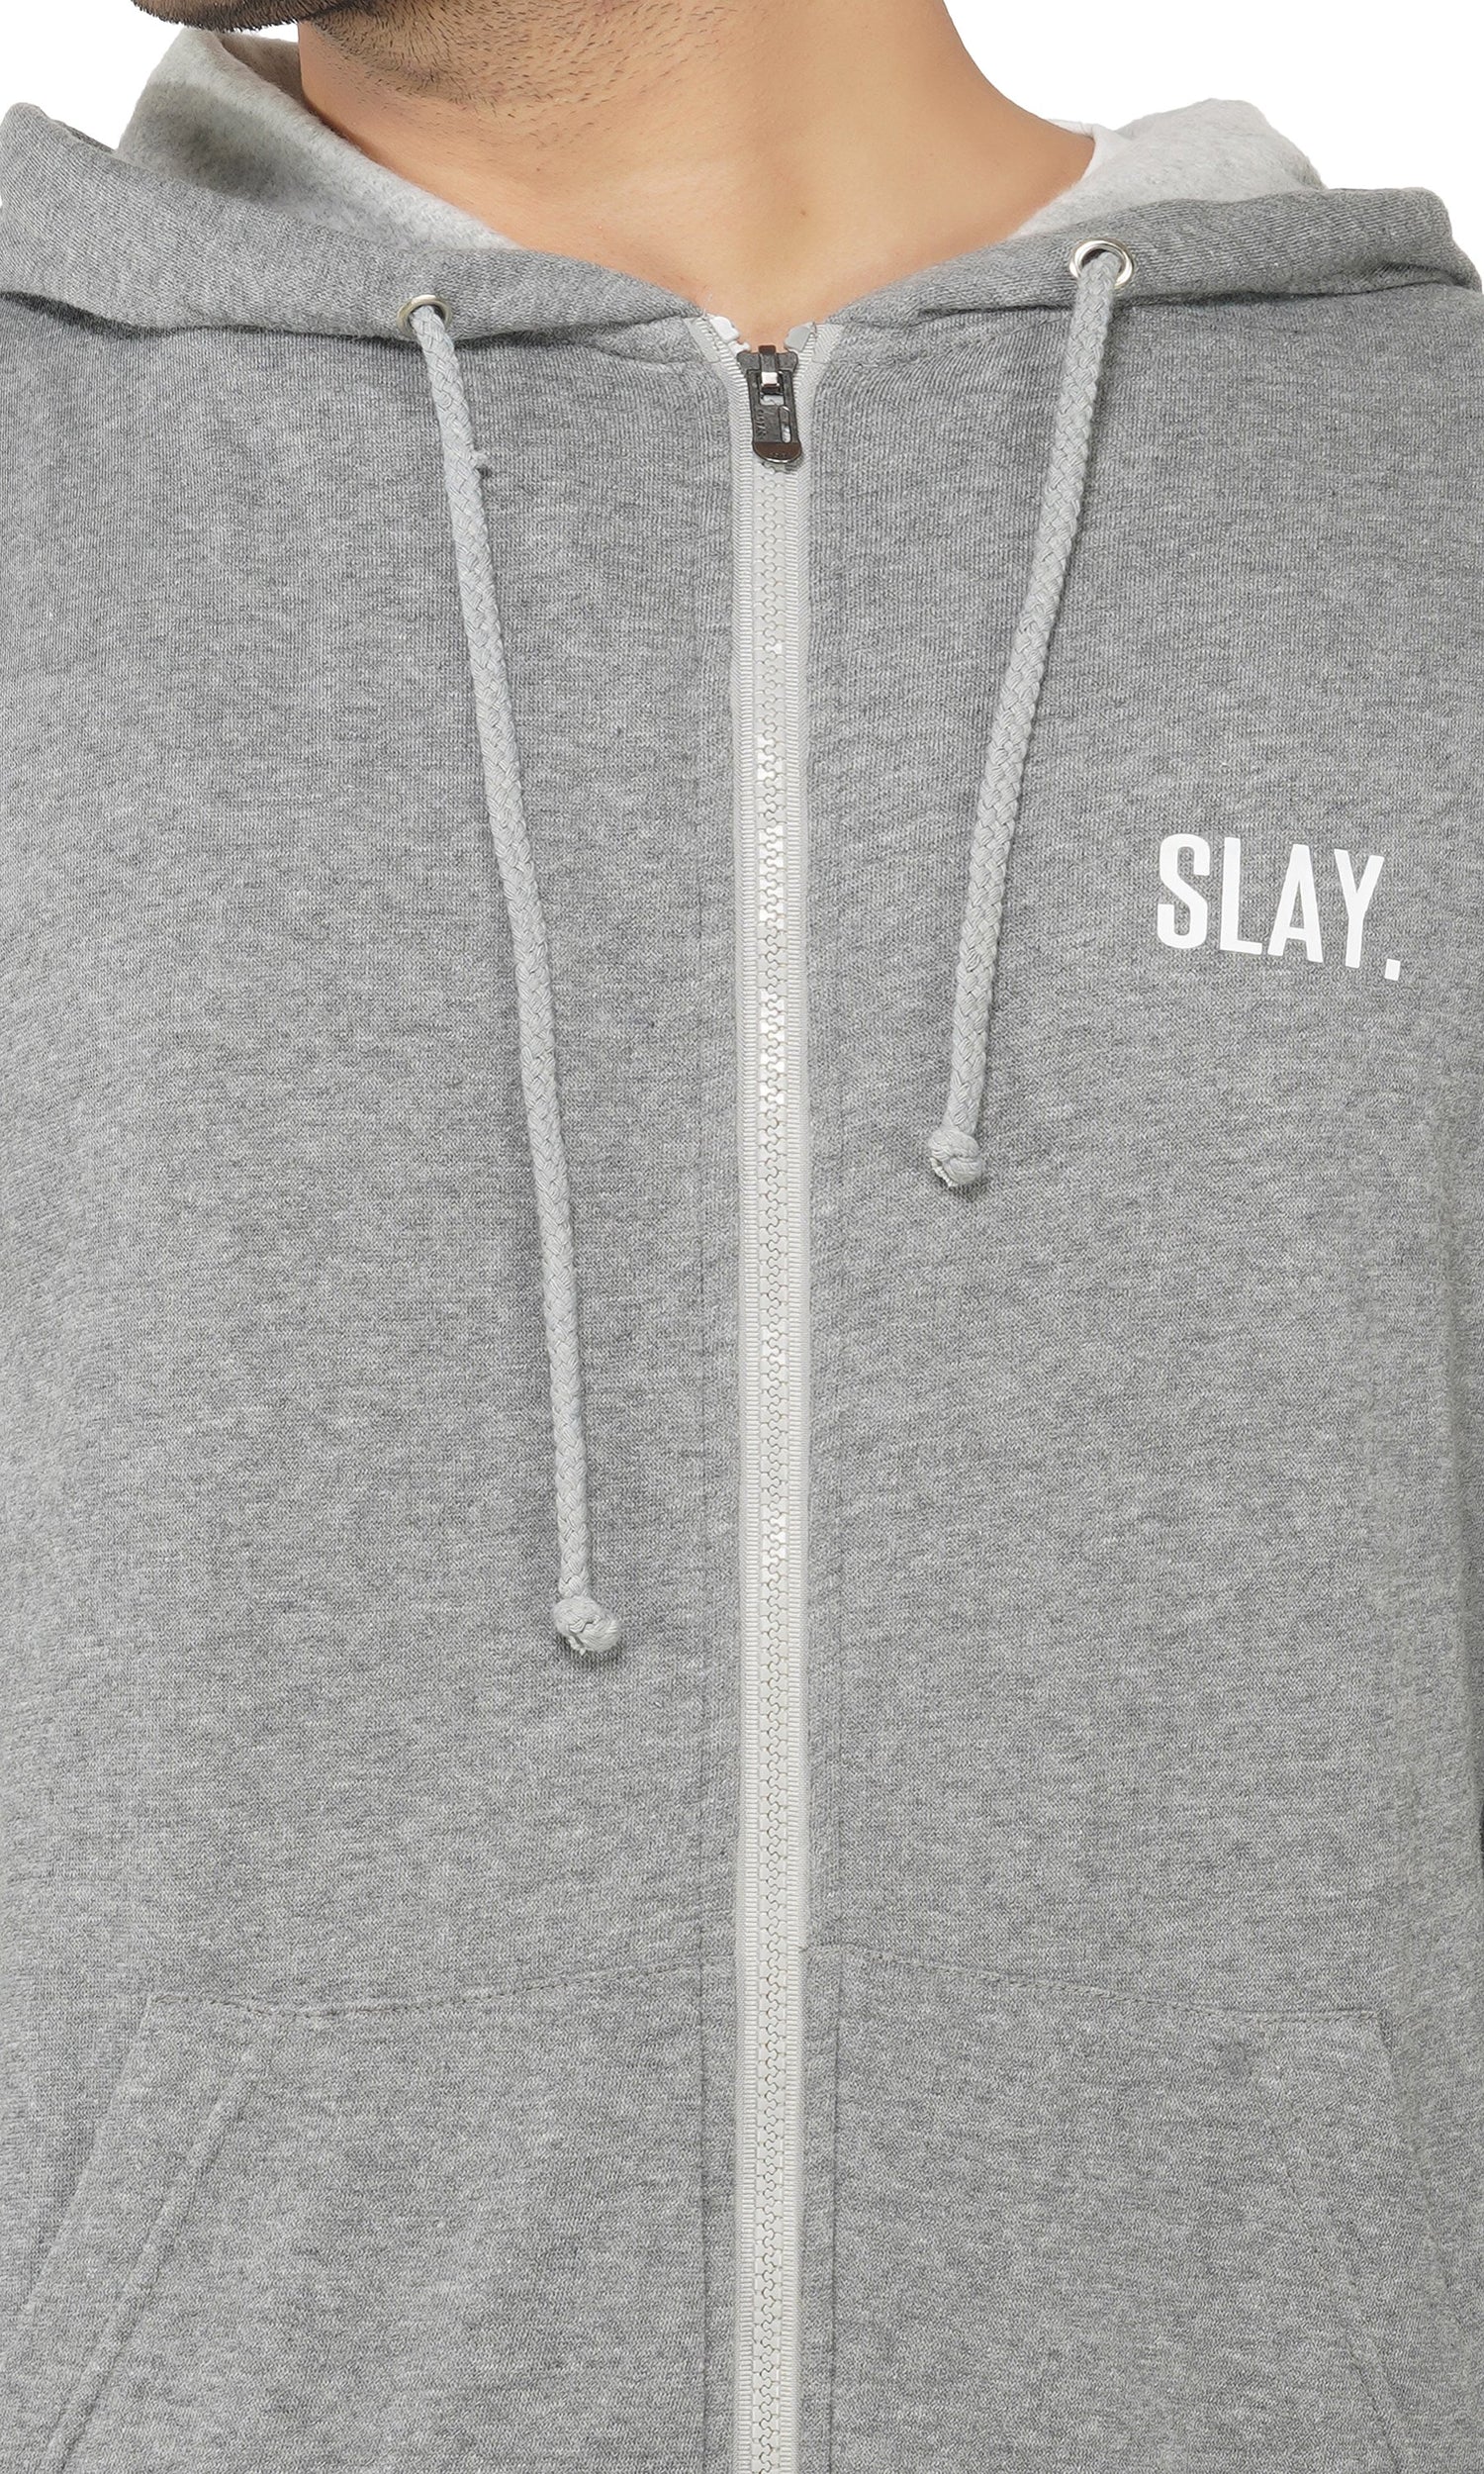 SLAY. Men's BALLER Edition Printed Men's Light Grey Jacket-clothing-to-slay.myshopify.com-Jacket